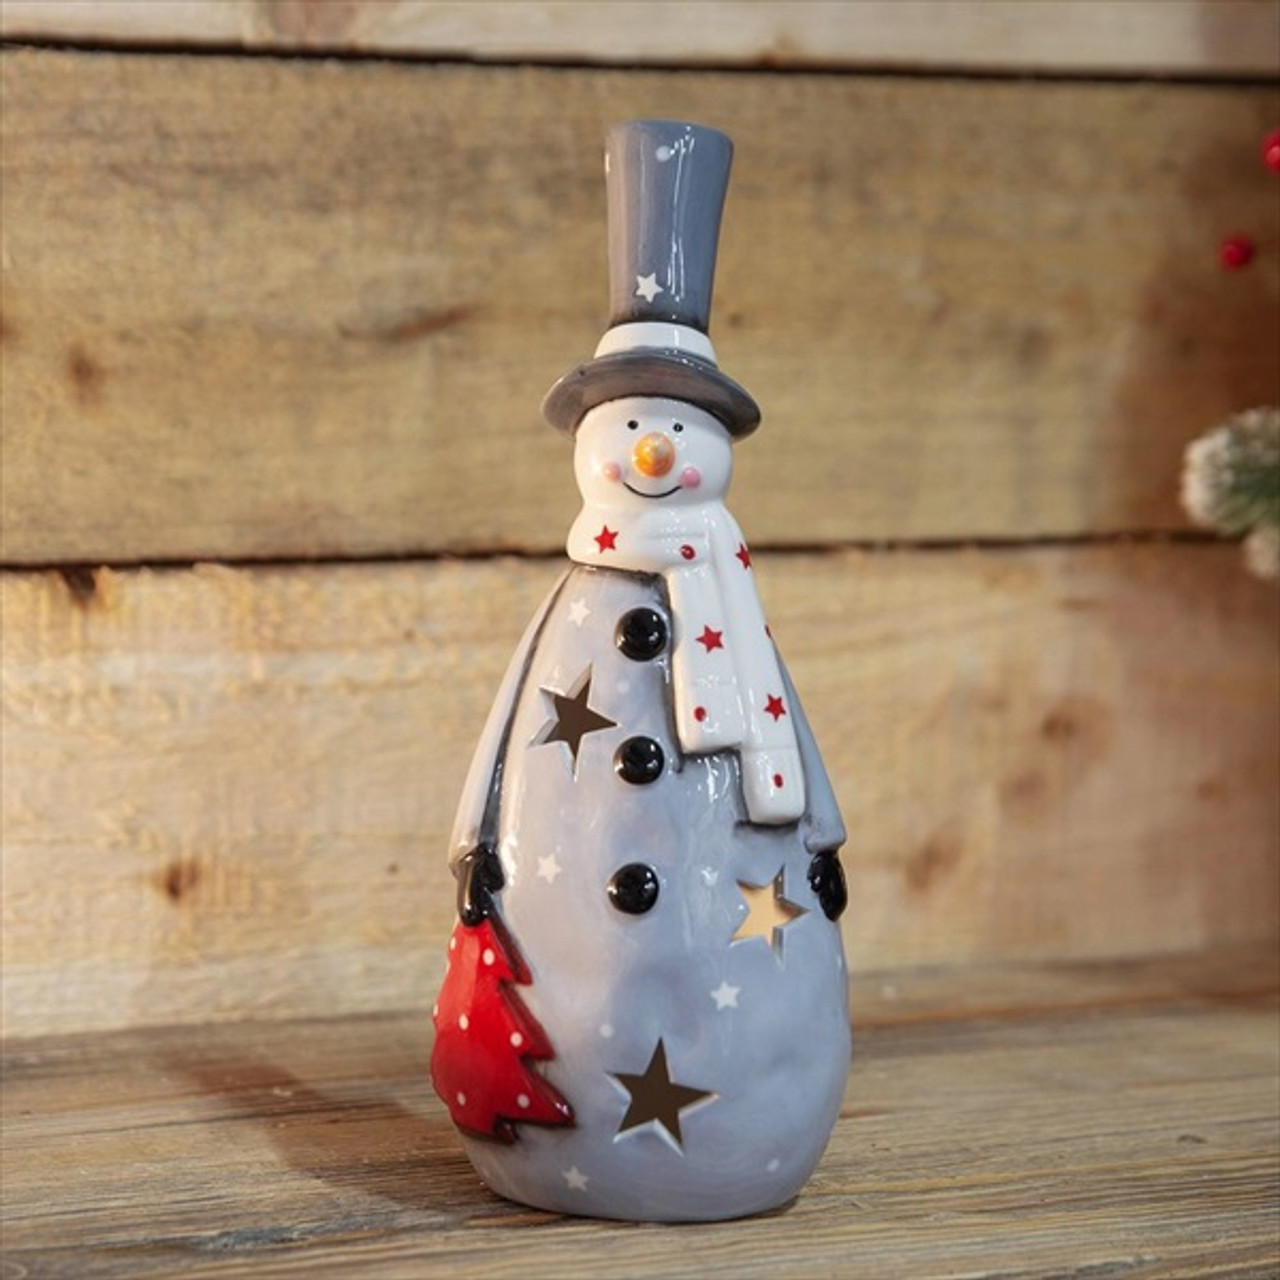 Hand painted ceramic light-up Snowman